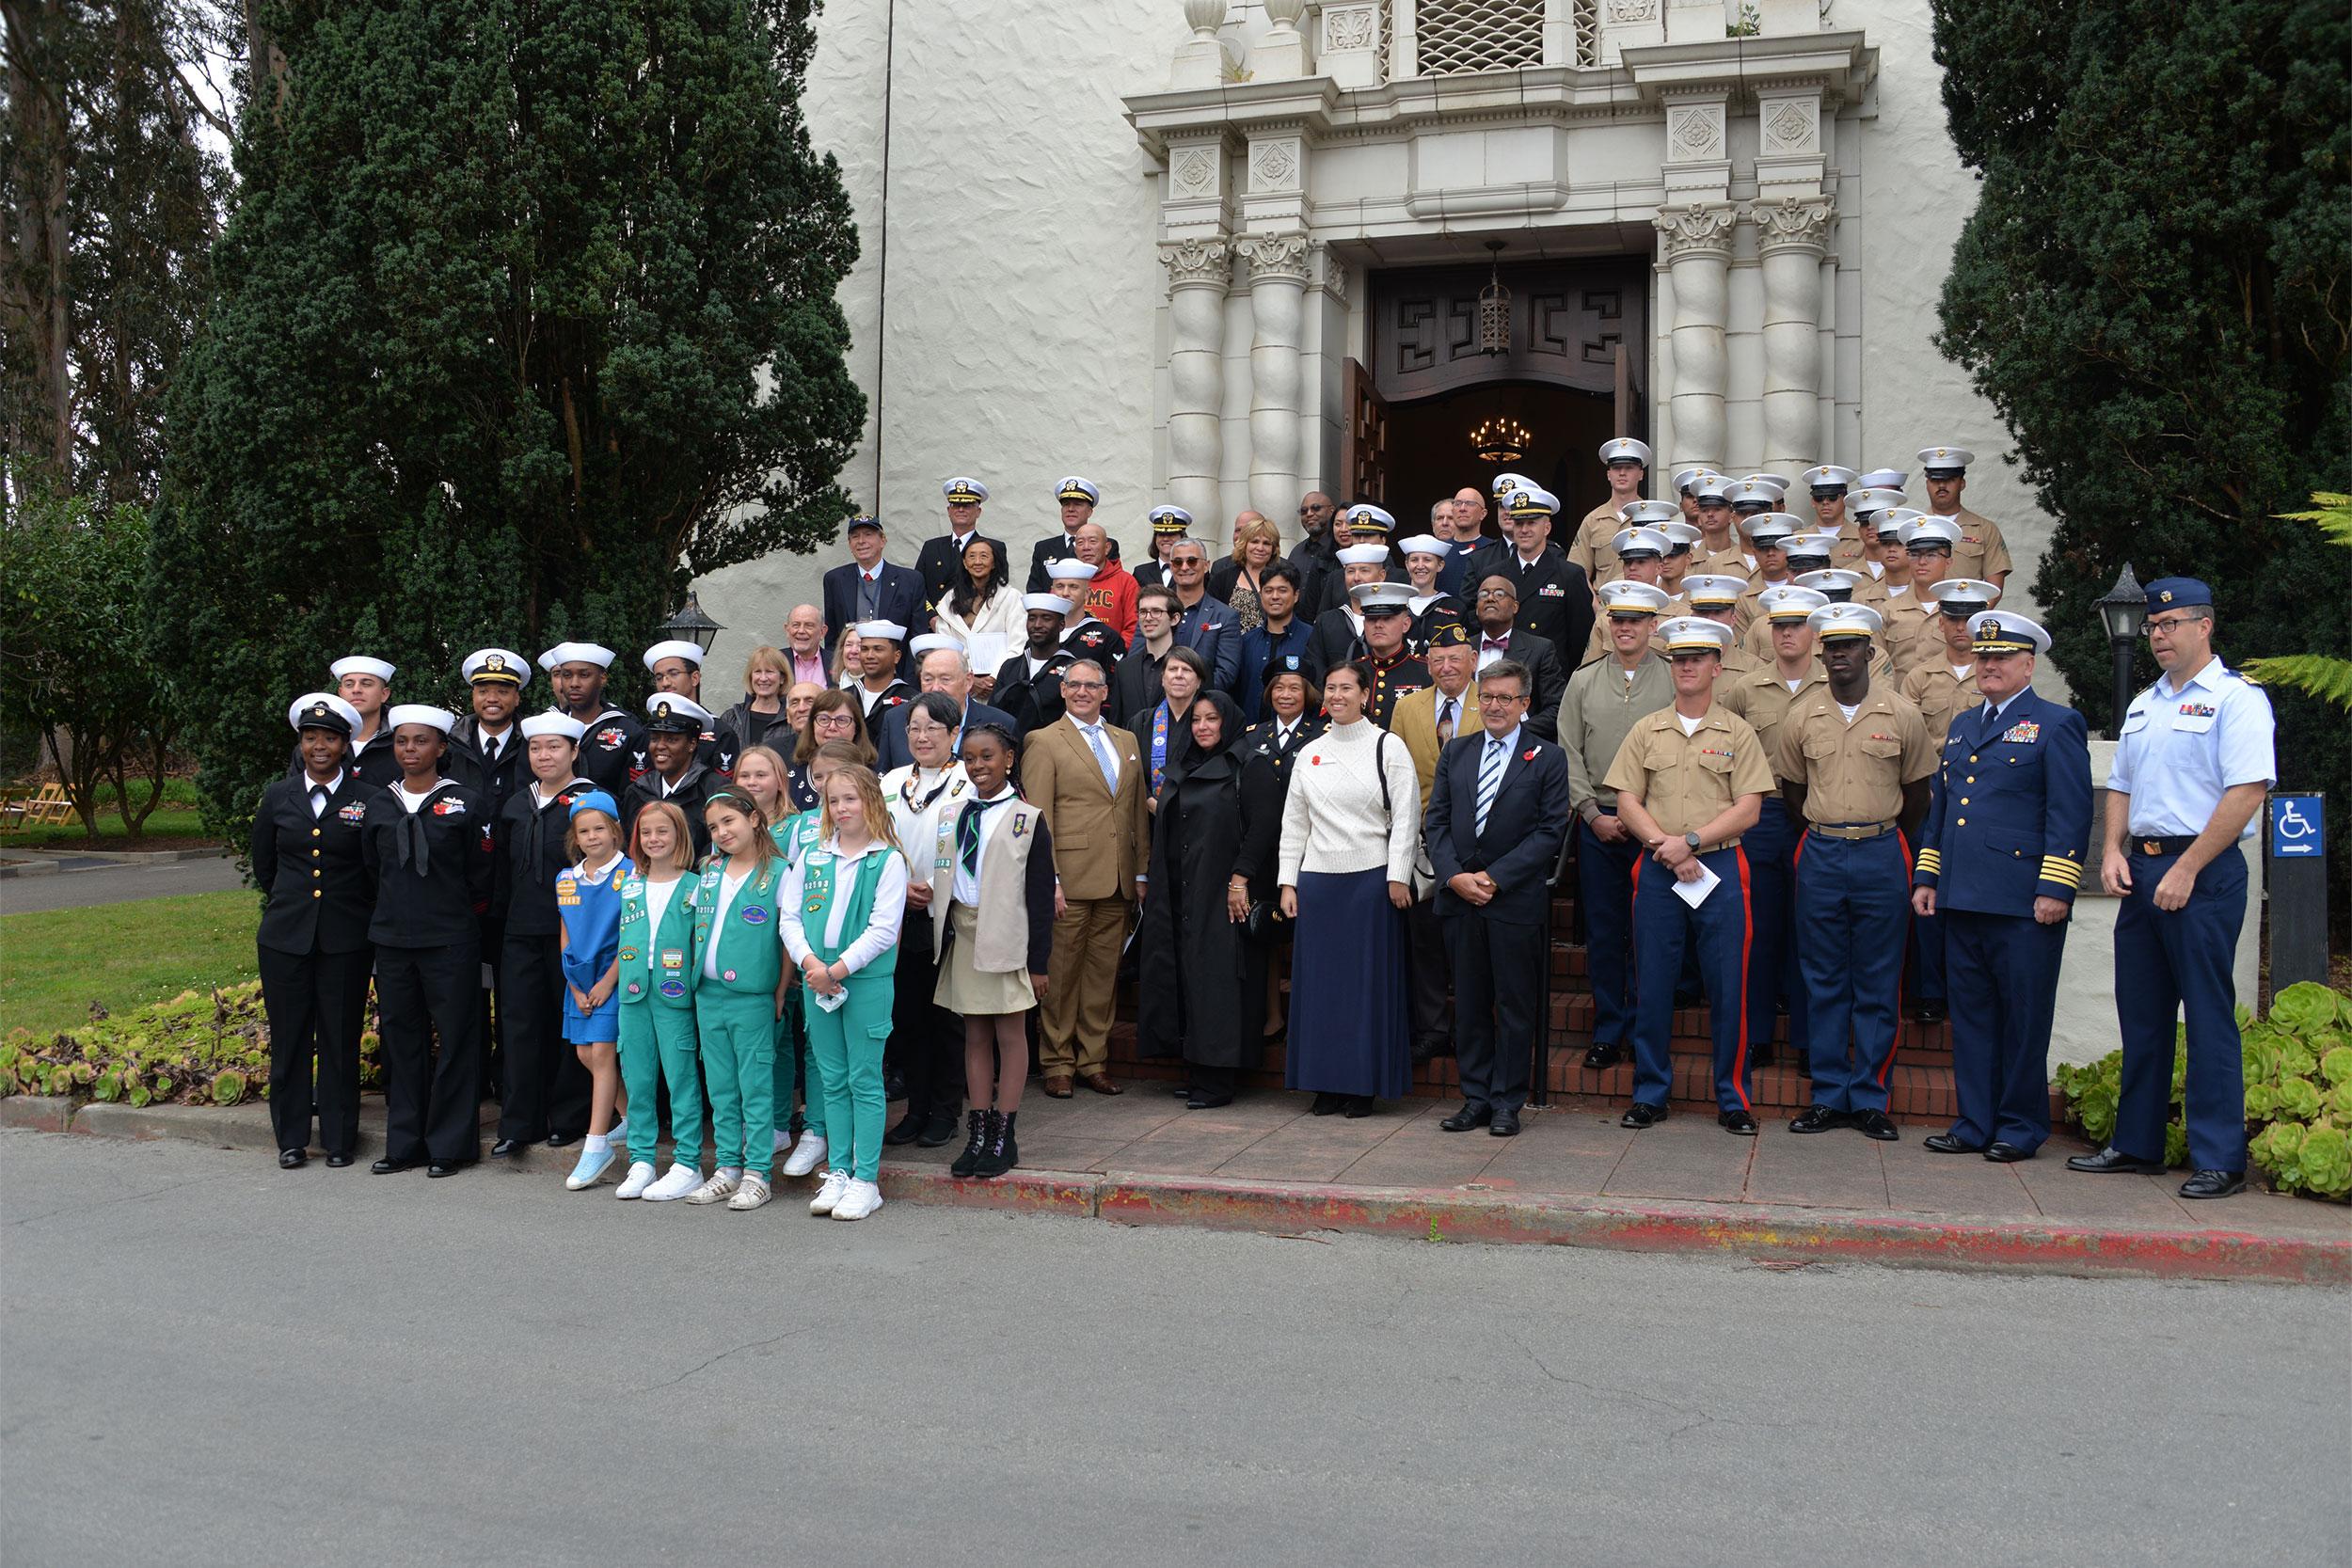 Fleet group photo in front of Interfaith Center